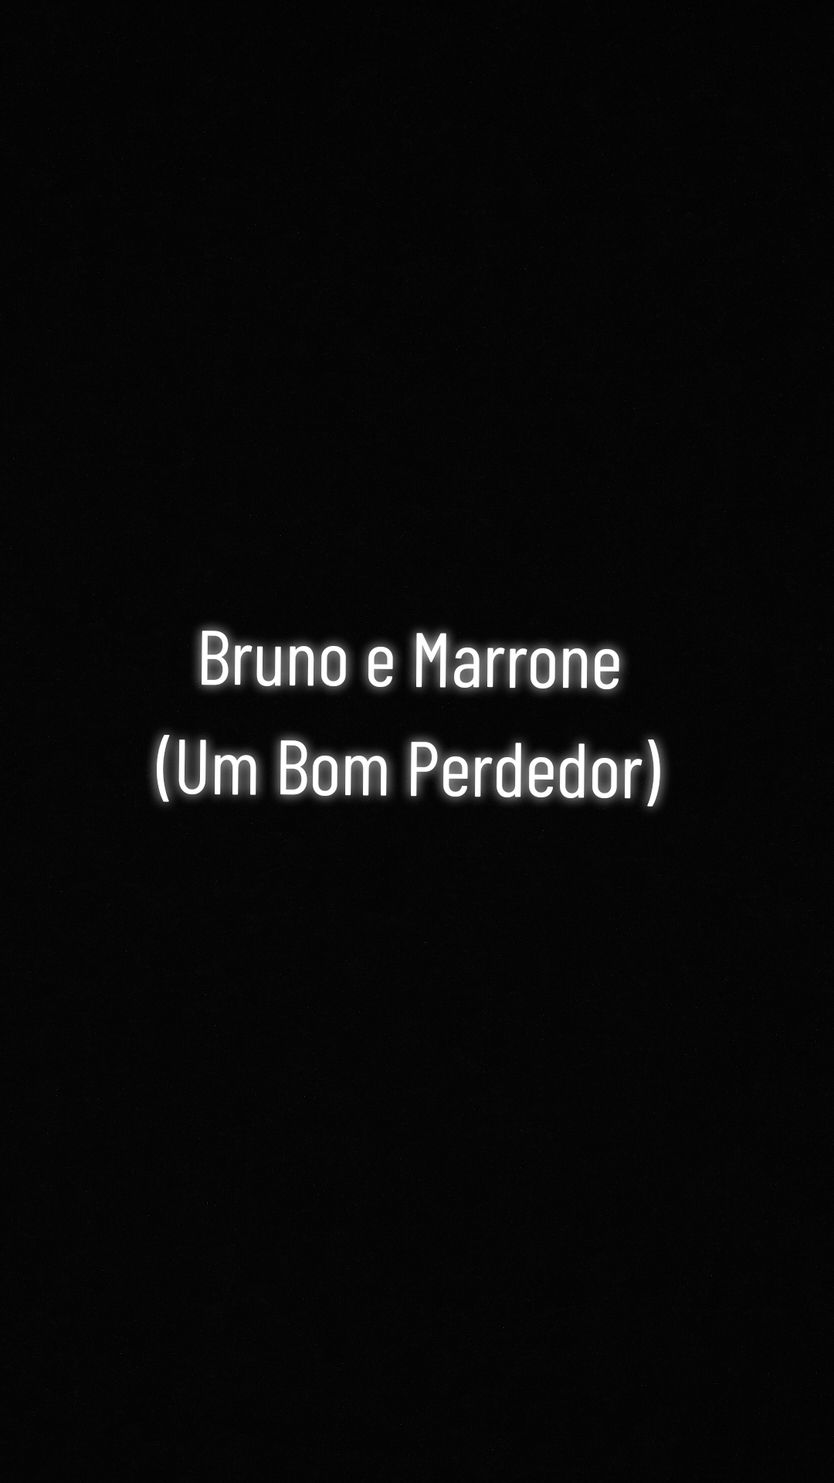 Um Bom Perdedor #brunoemarrone  #sertanejo  #musicasertaneja  #sertanejodesucesso  #sofrenciasertaneja 